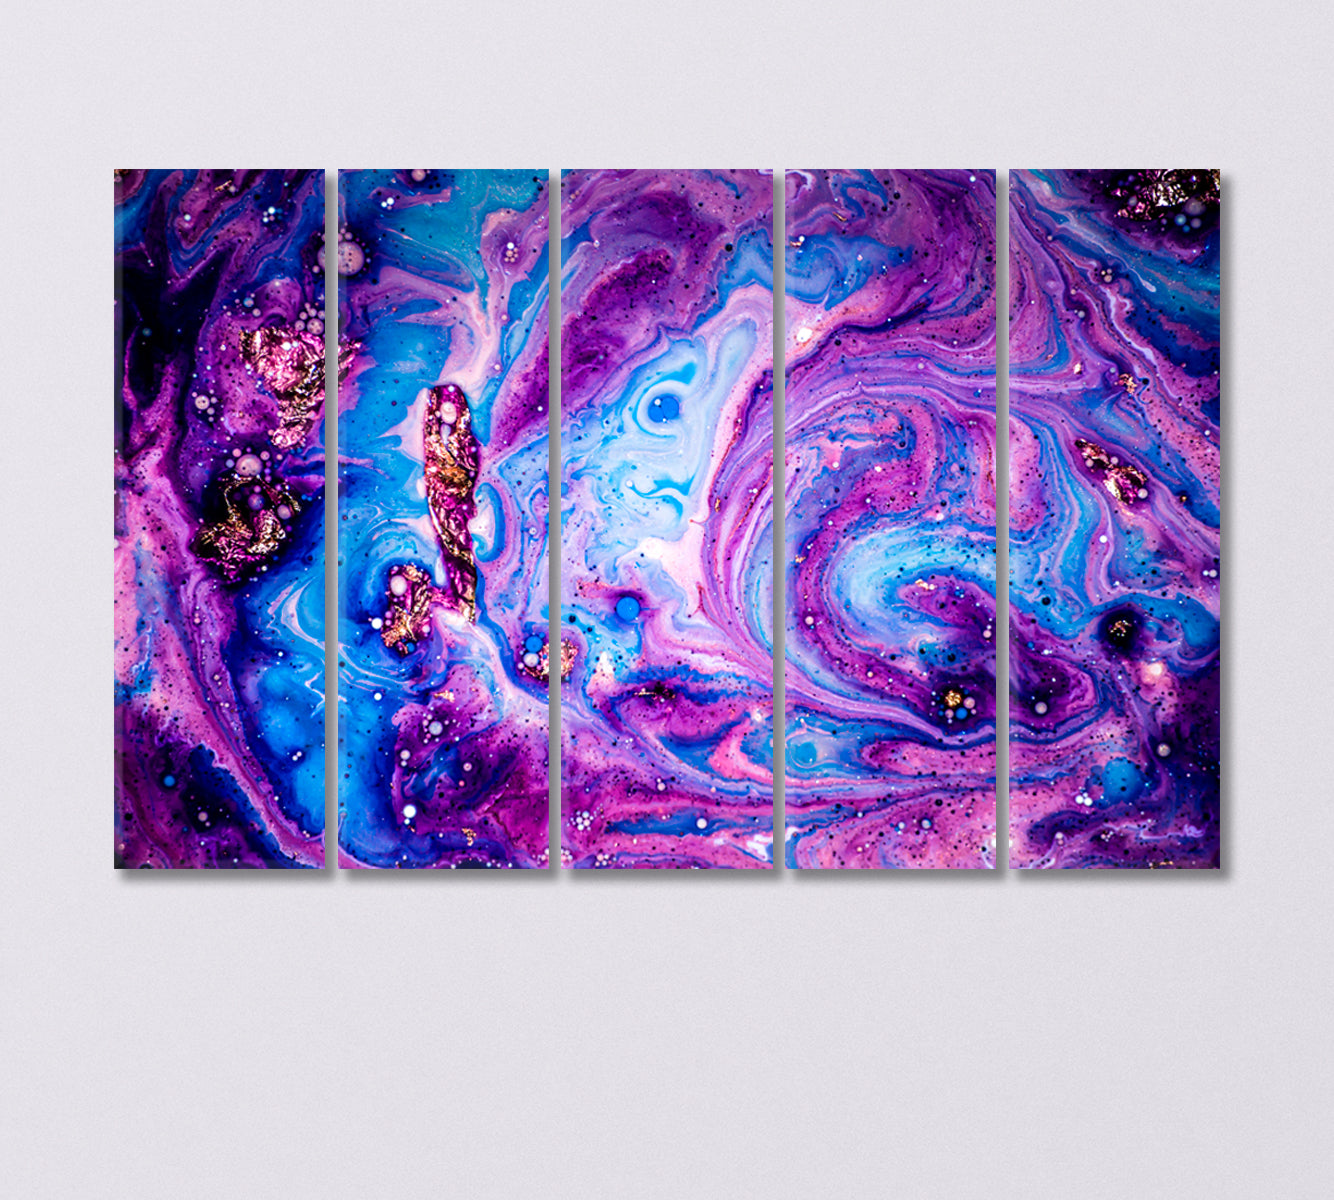 Eastern Marble Pattern Canvas Print-Canvas Print-CetArt-5 Panels-36x24 inches-CetArt